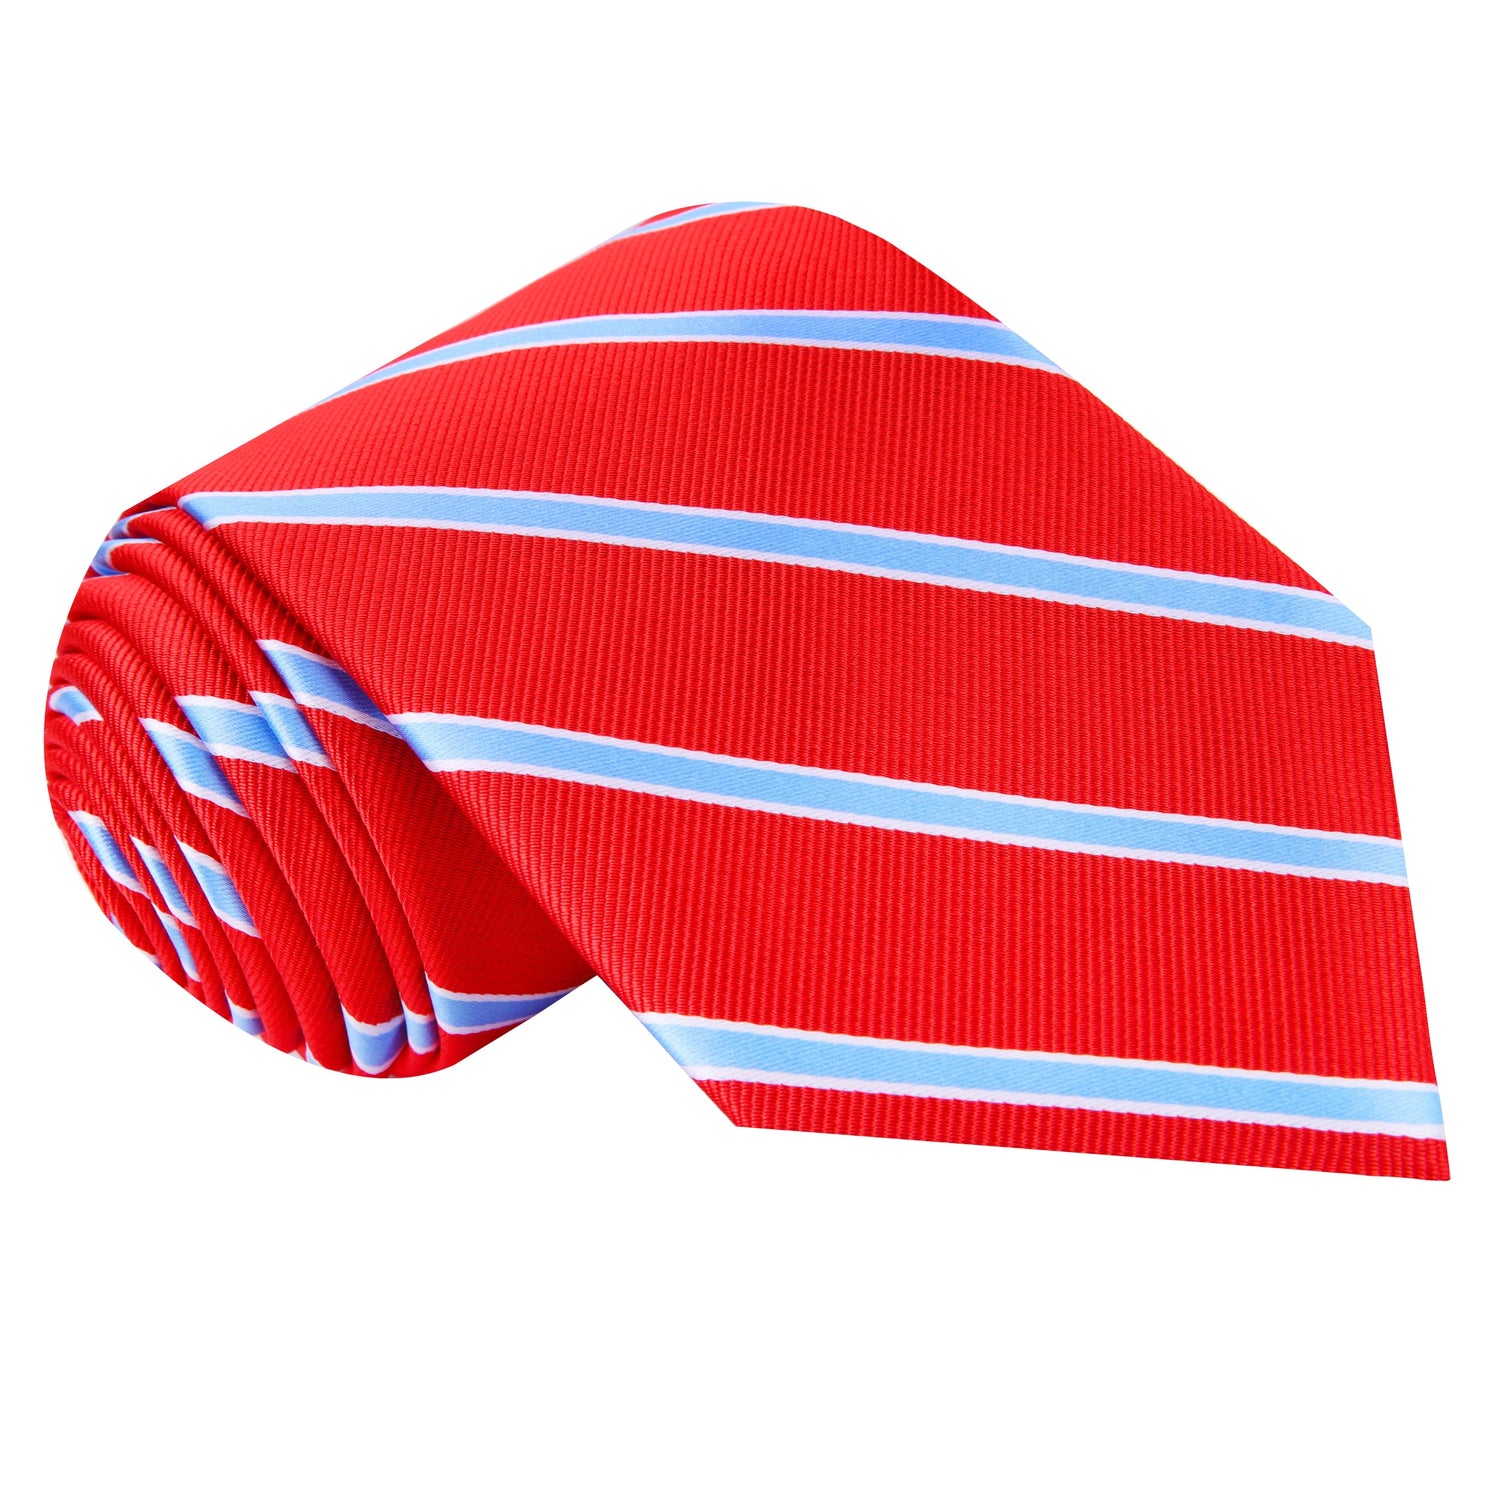 Coach PRIME Deion Sanders Red, Light Blue Stripe Tie